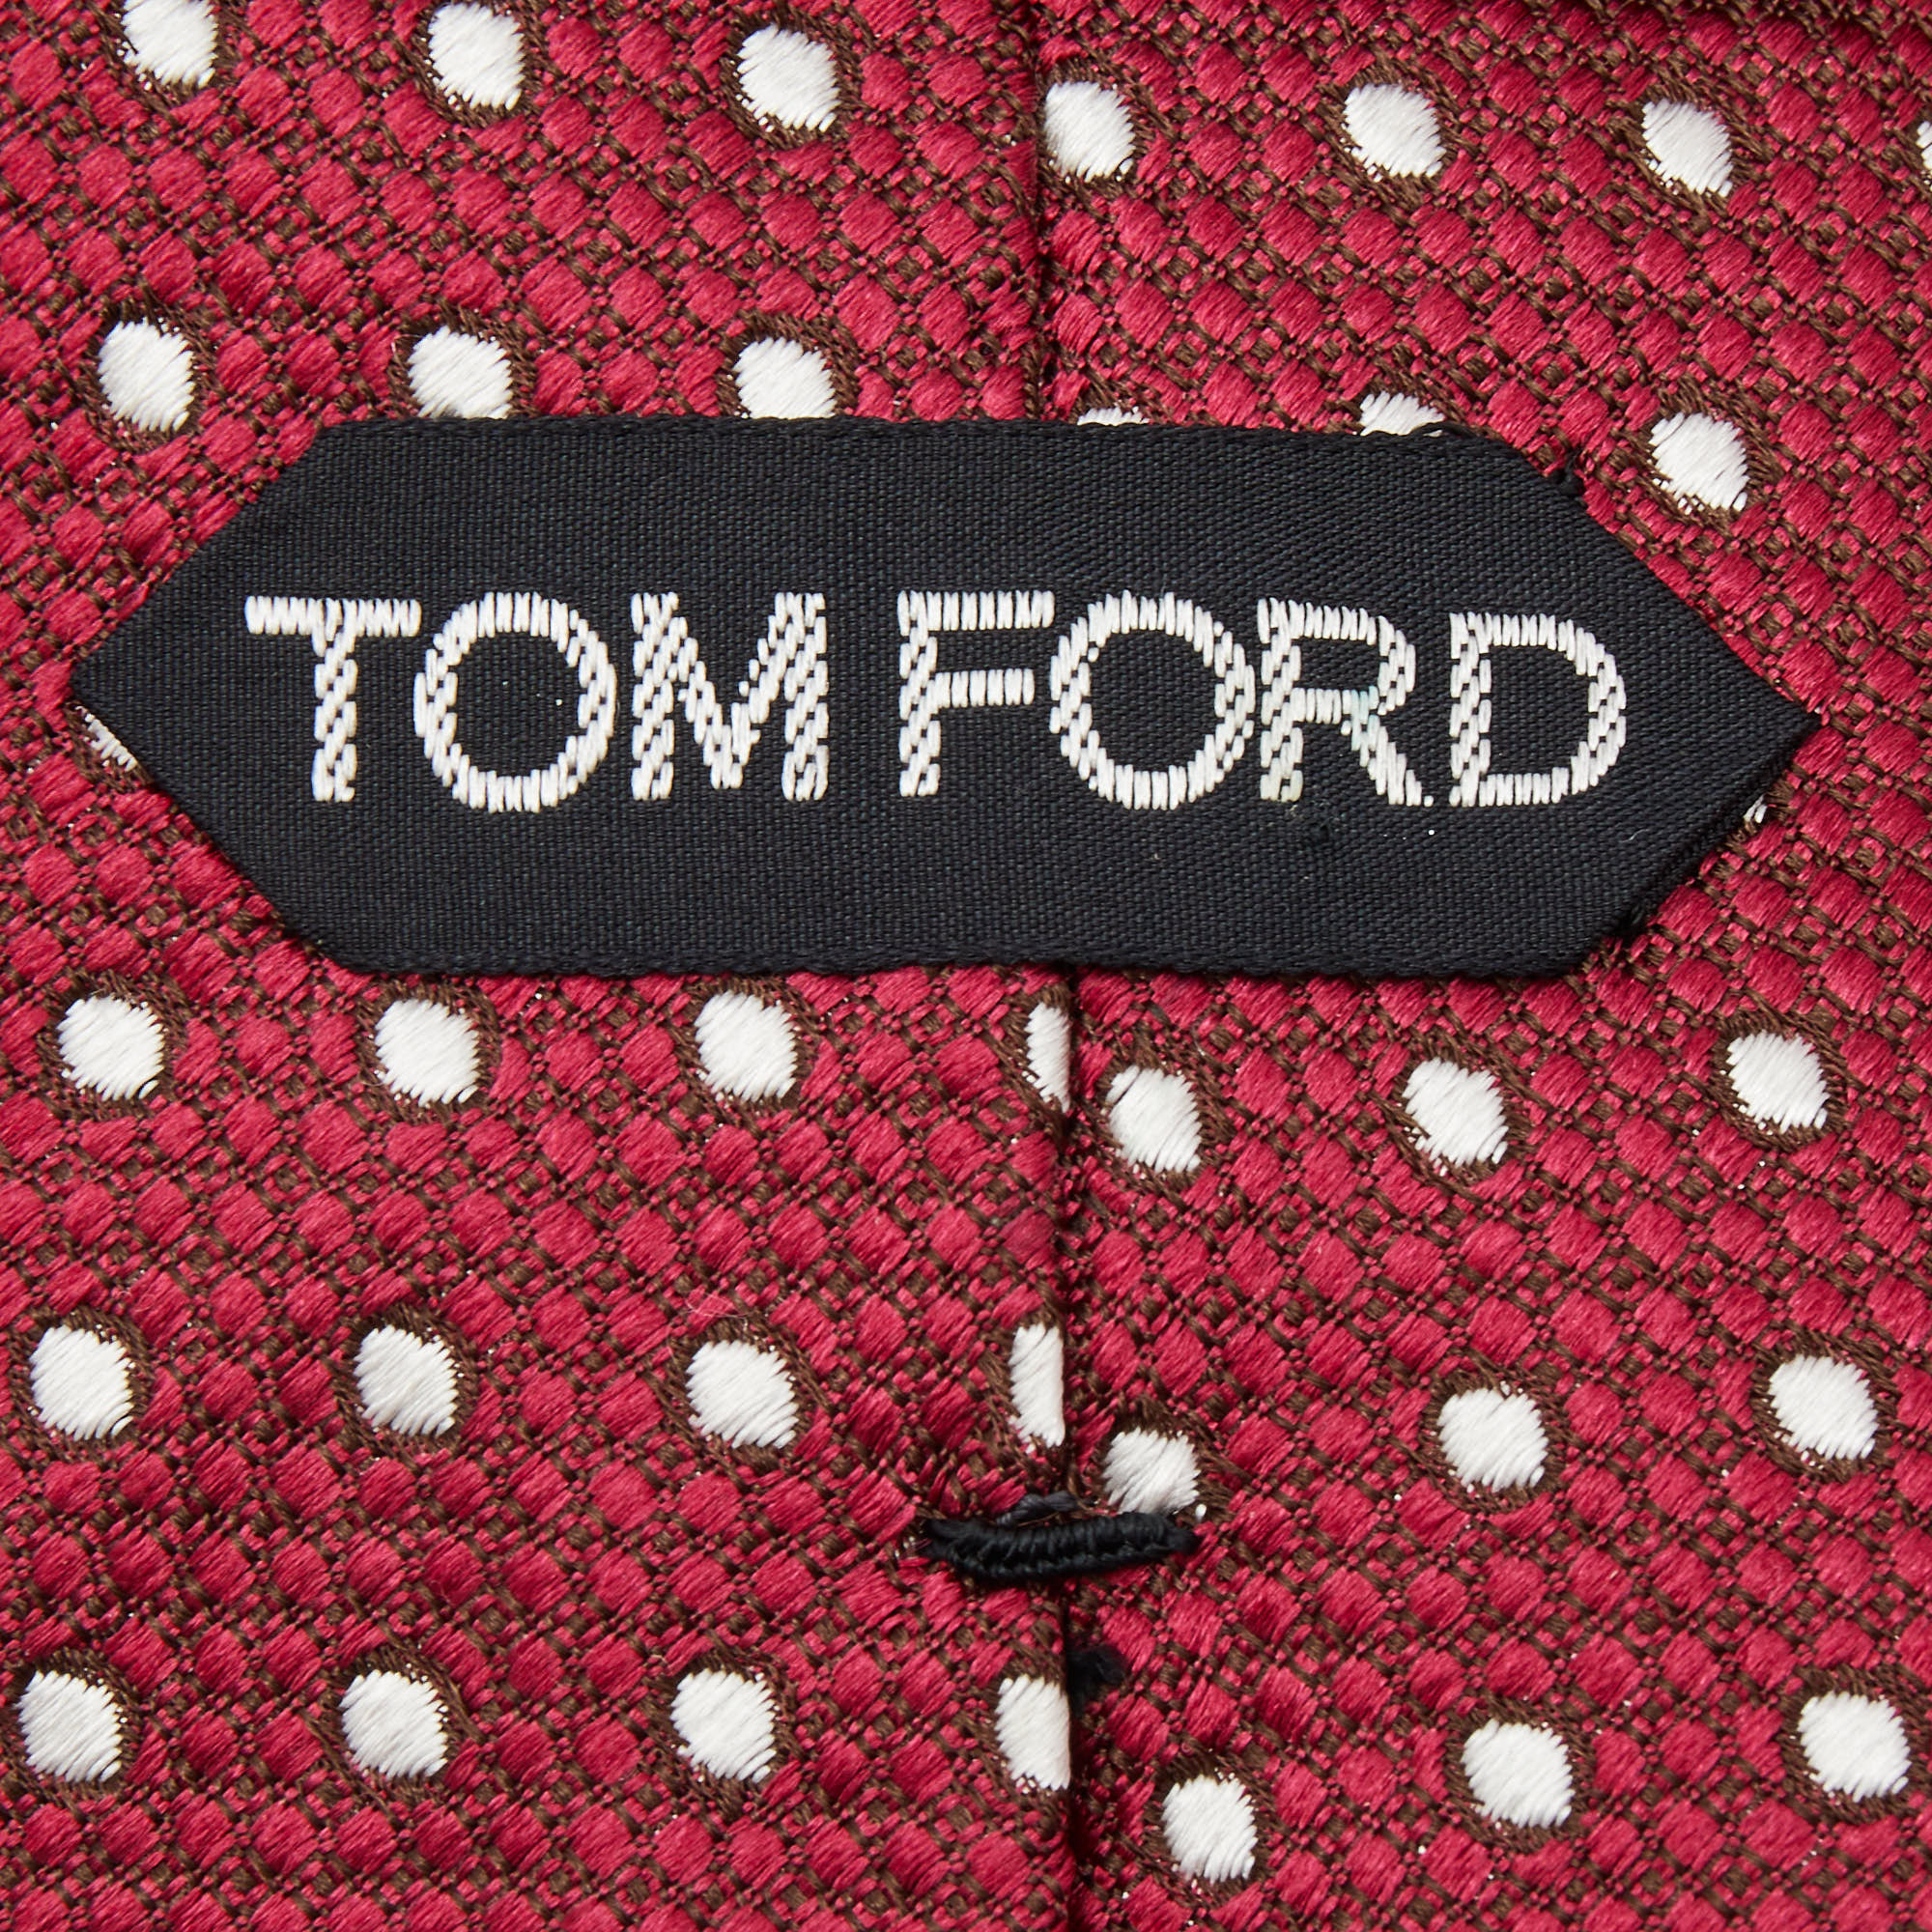 Tom Ford Dark Pink Patterned Silk Tie